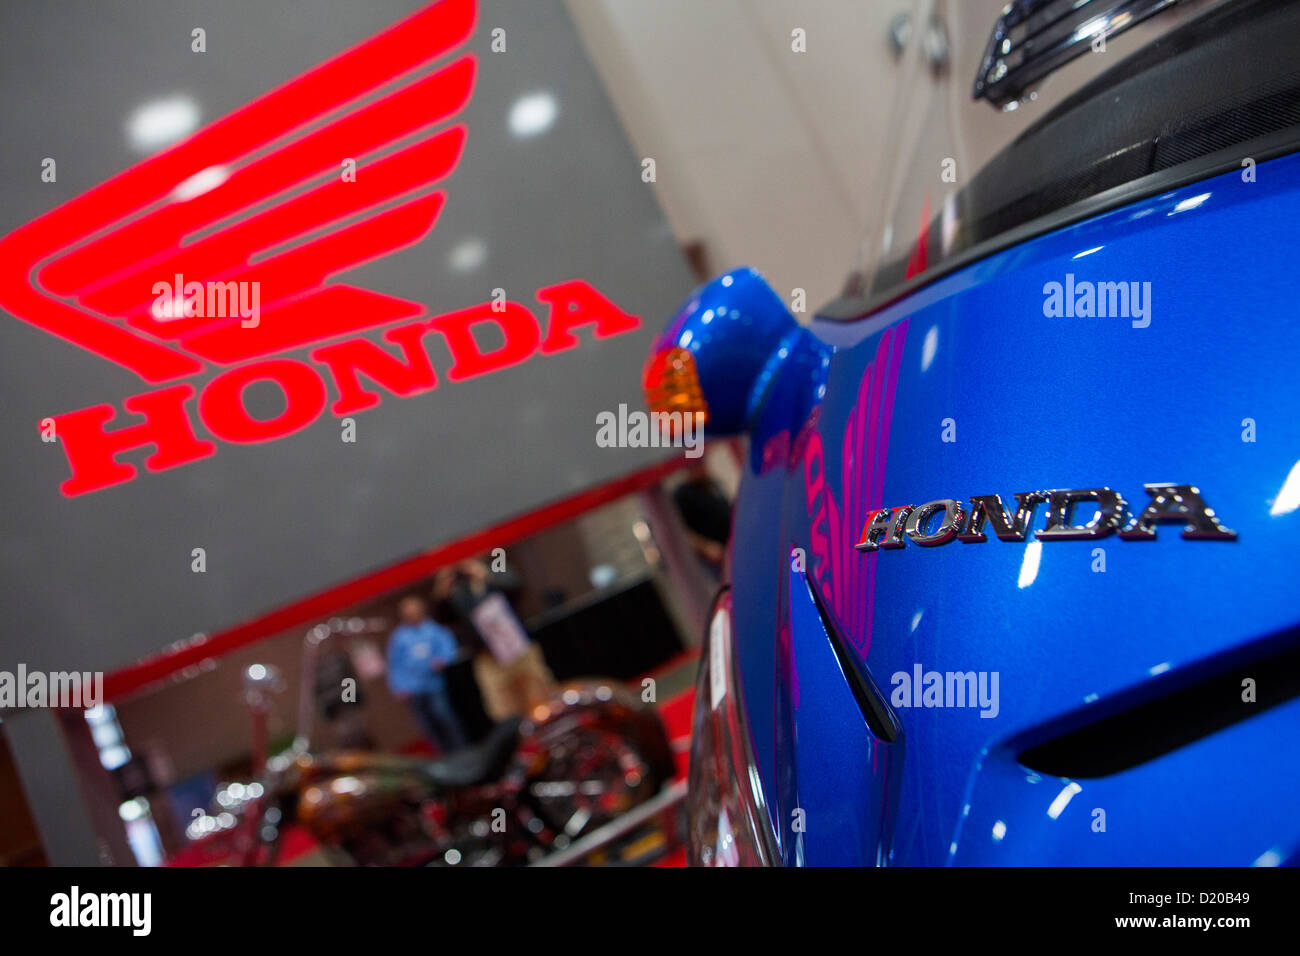 Motociclette Honda sul display al Washington Motorcycle Show. Foto Stock